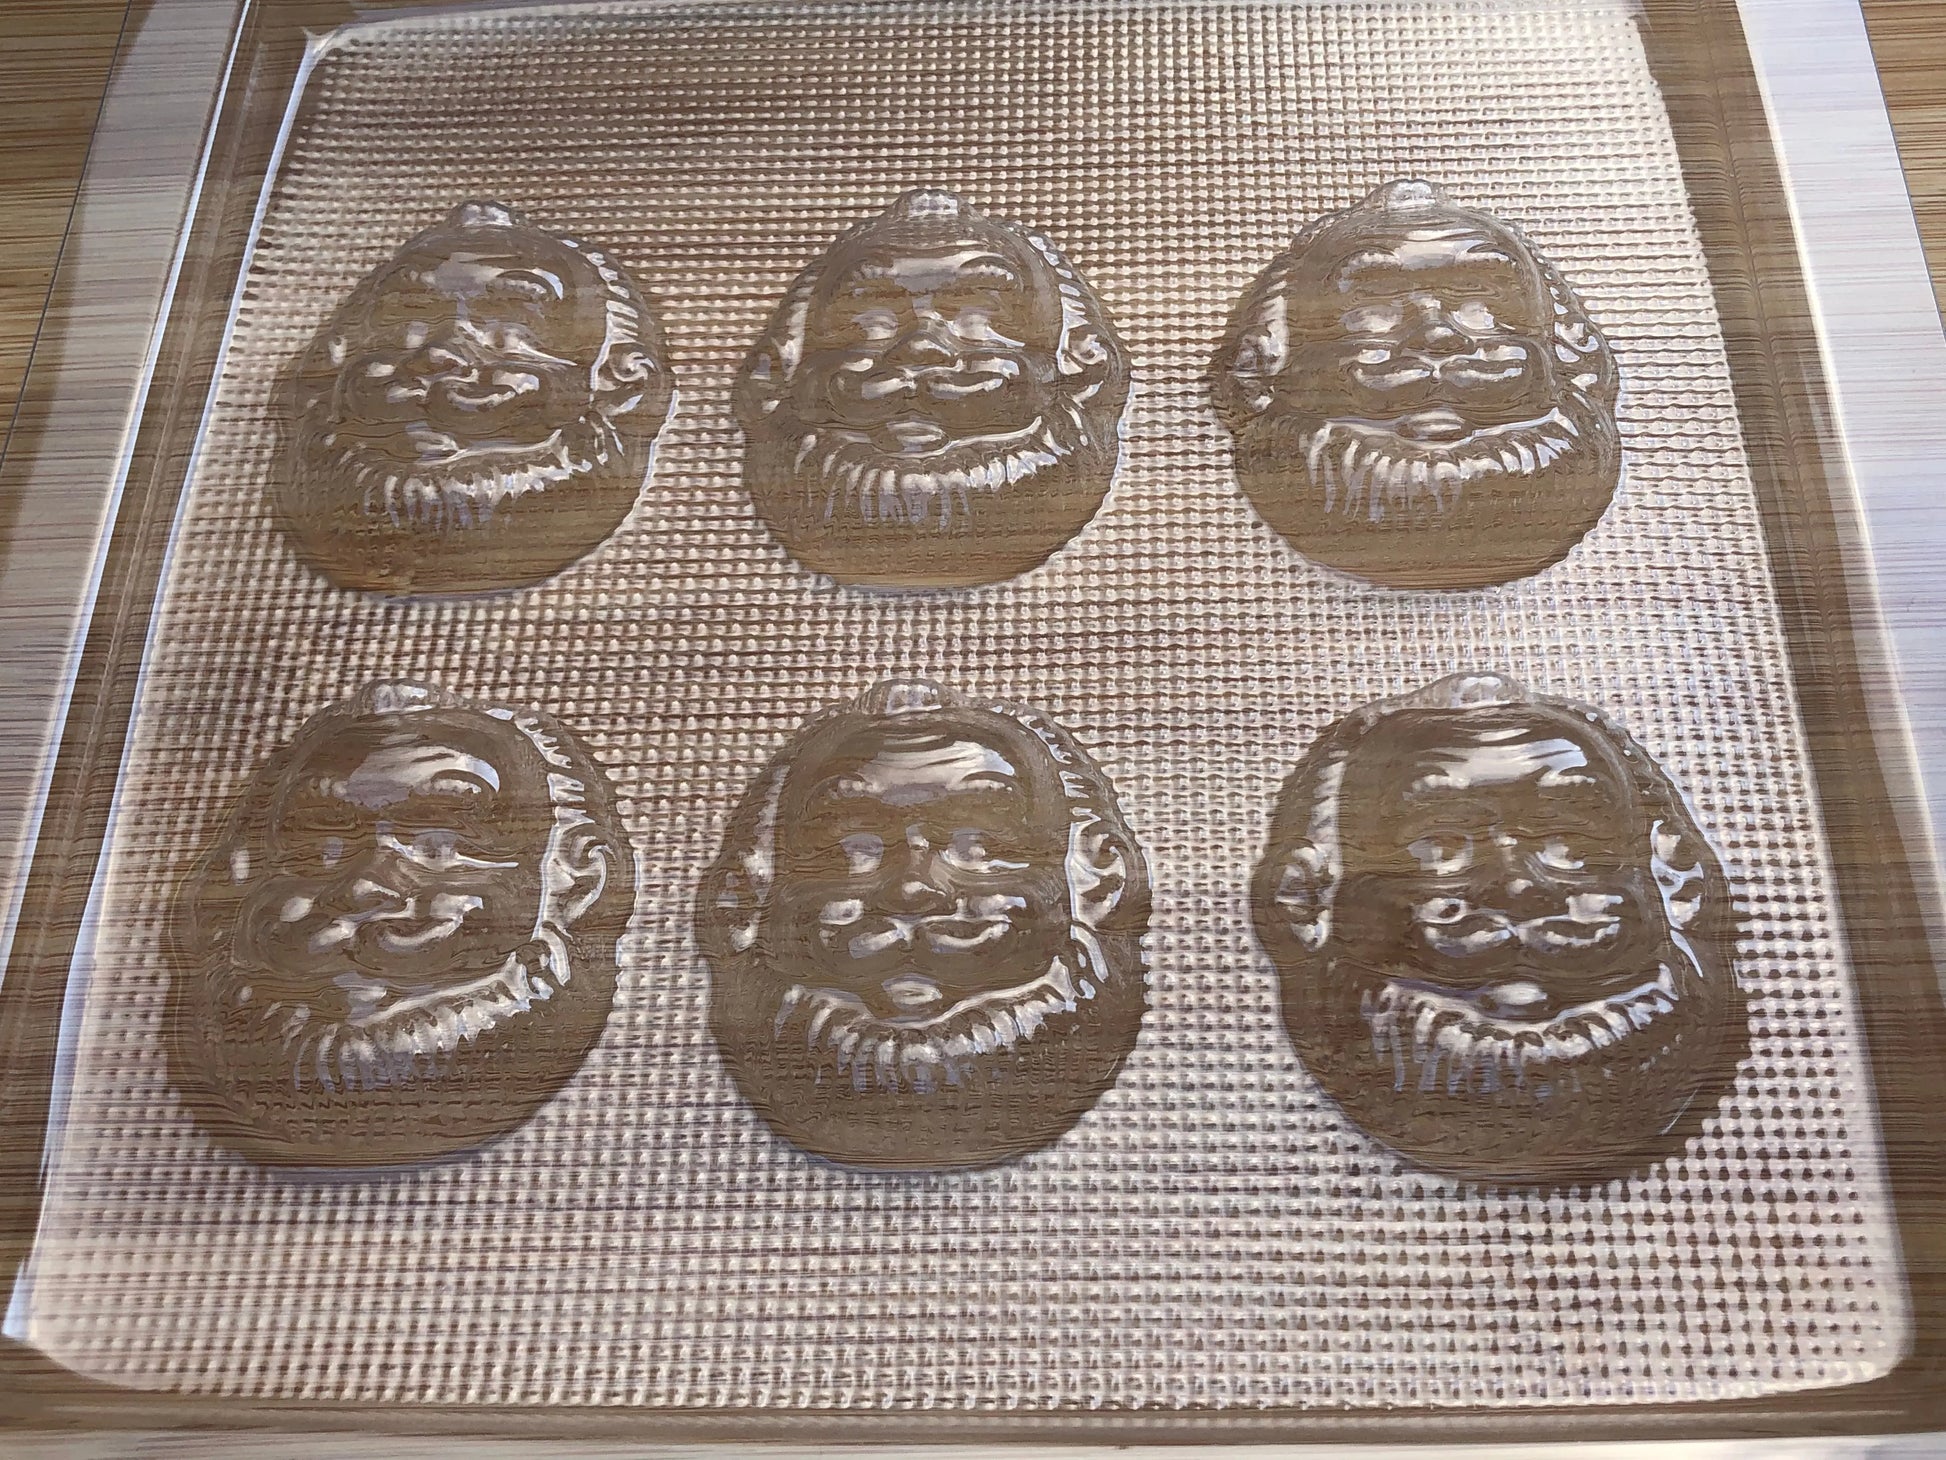 Christmas chocolate mould - 6 Santa Claus MEG cookie cutters